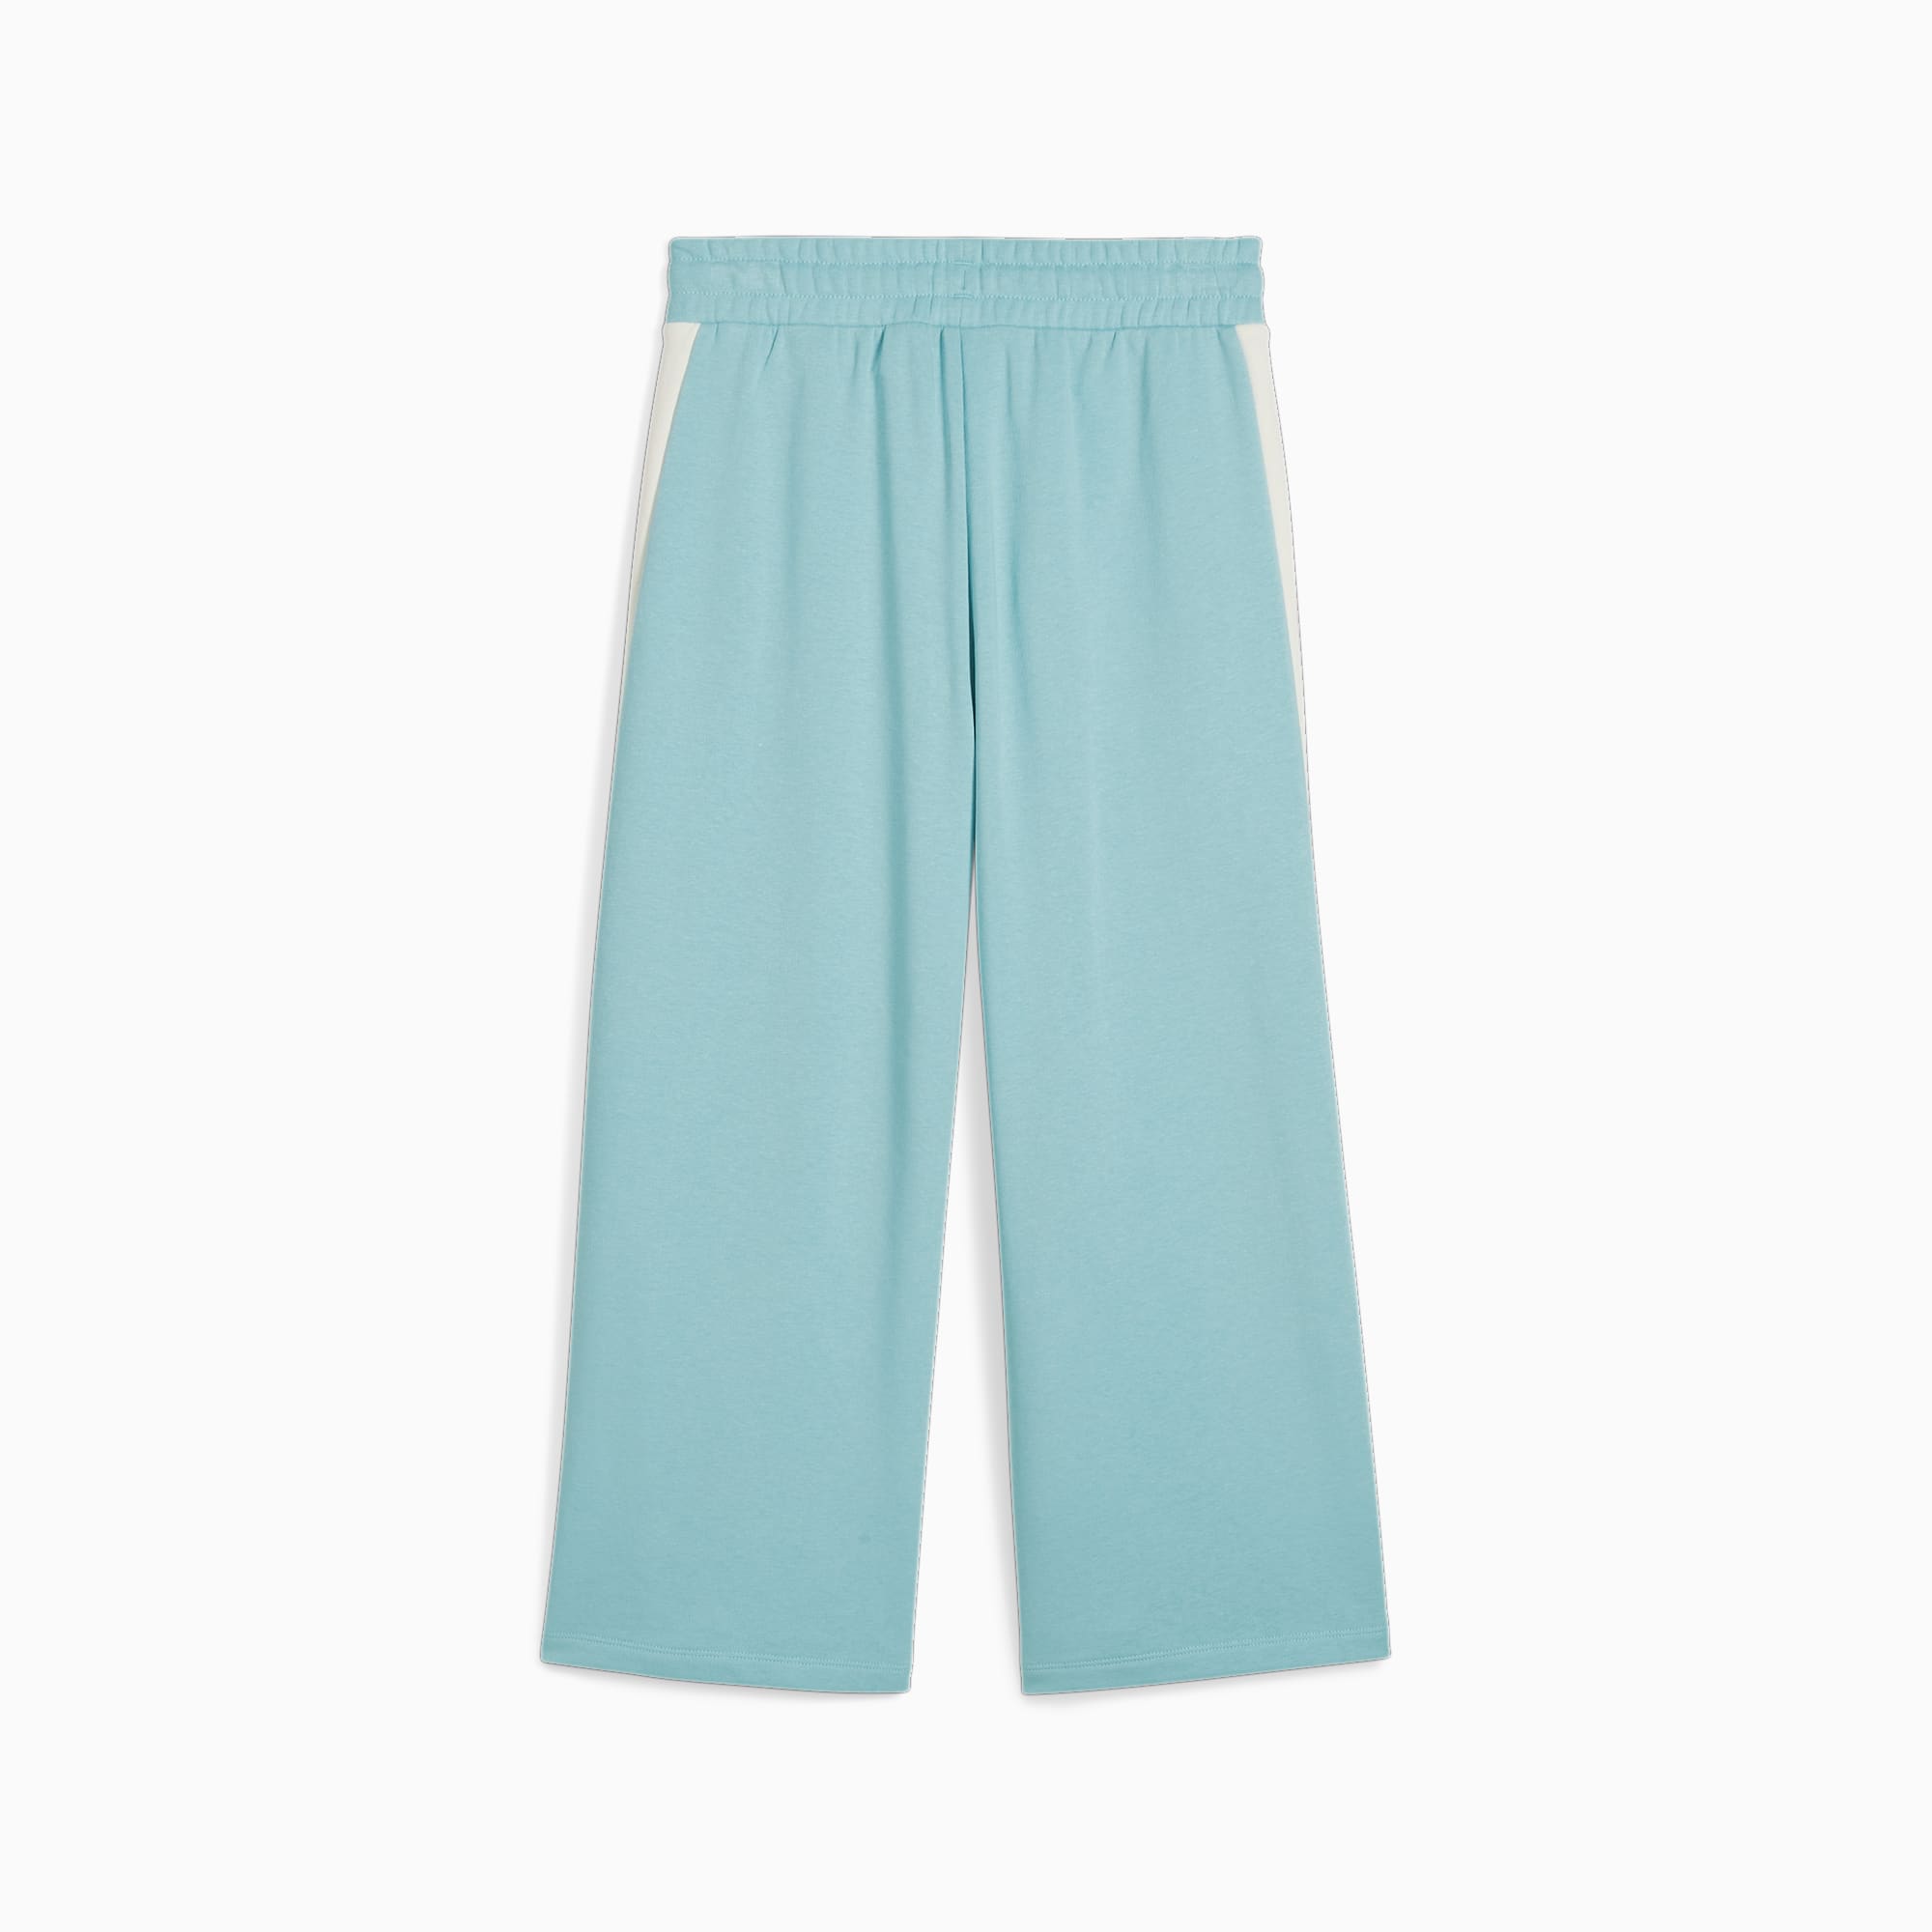 PUMA T7 Snflr Girls' 7/8 Sweatpants, Turquoise Surf, Size 128, Clothing